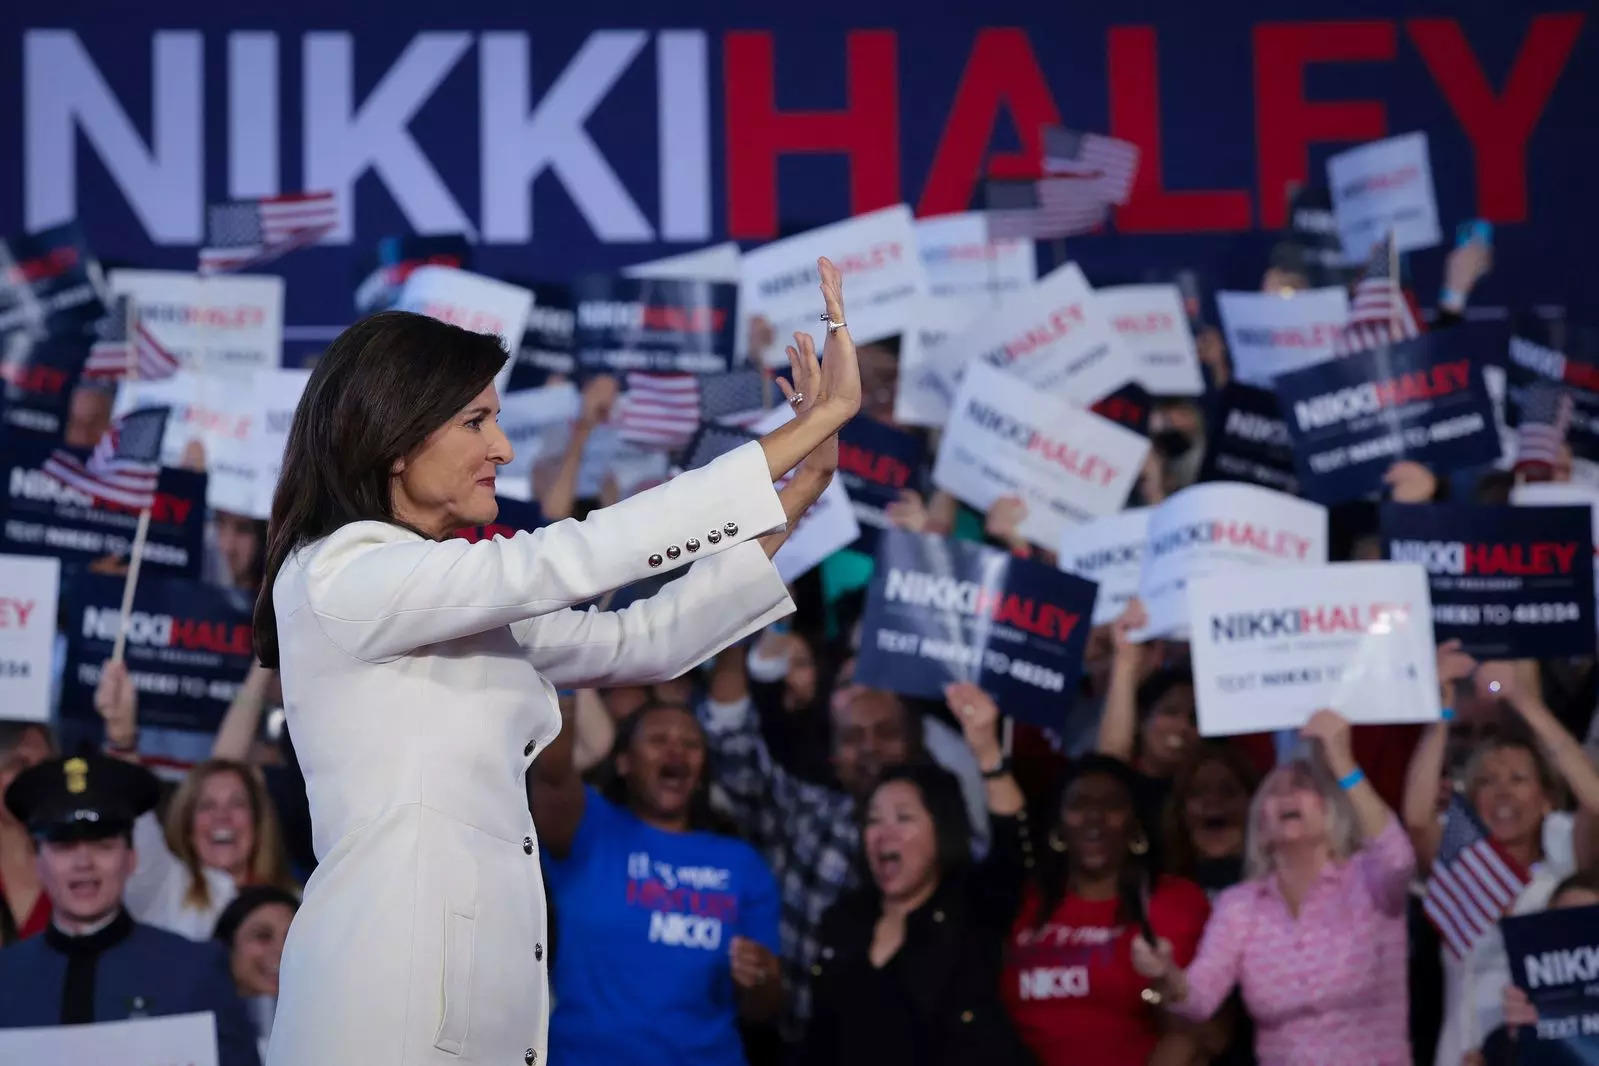 Nikki Haley launches US presidential bid